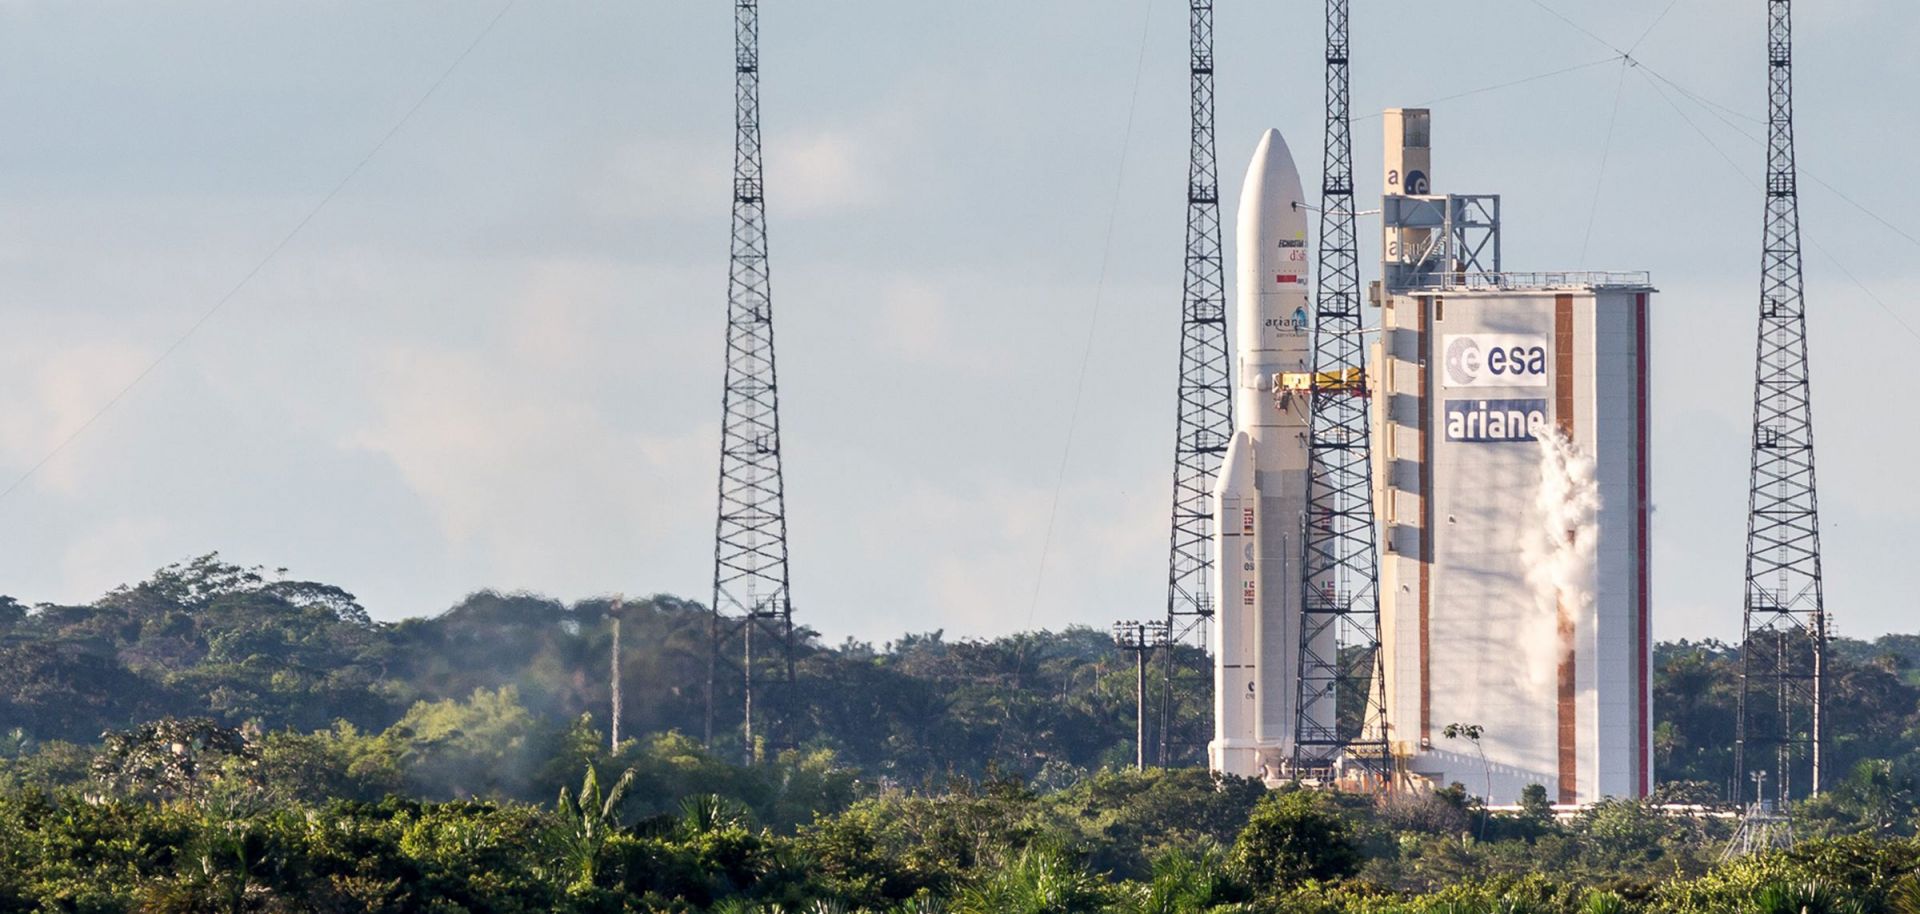 European Space Agency in French Guiana